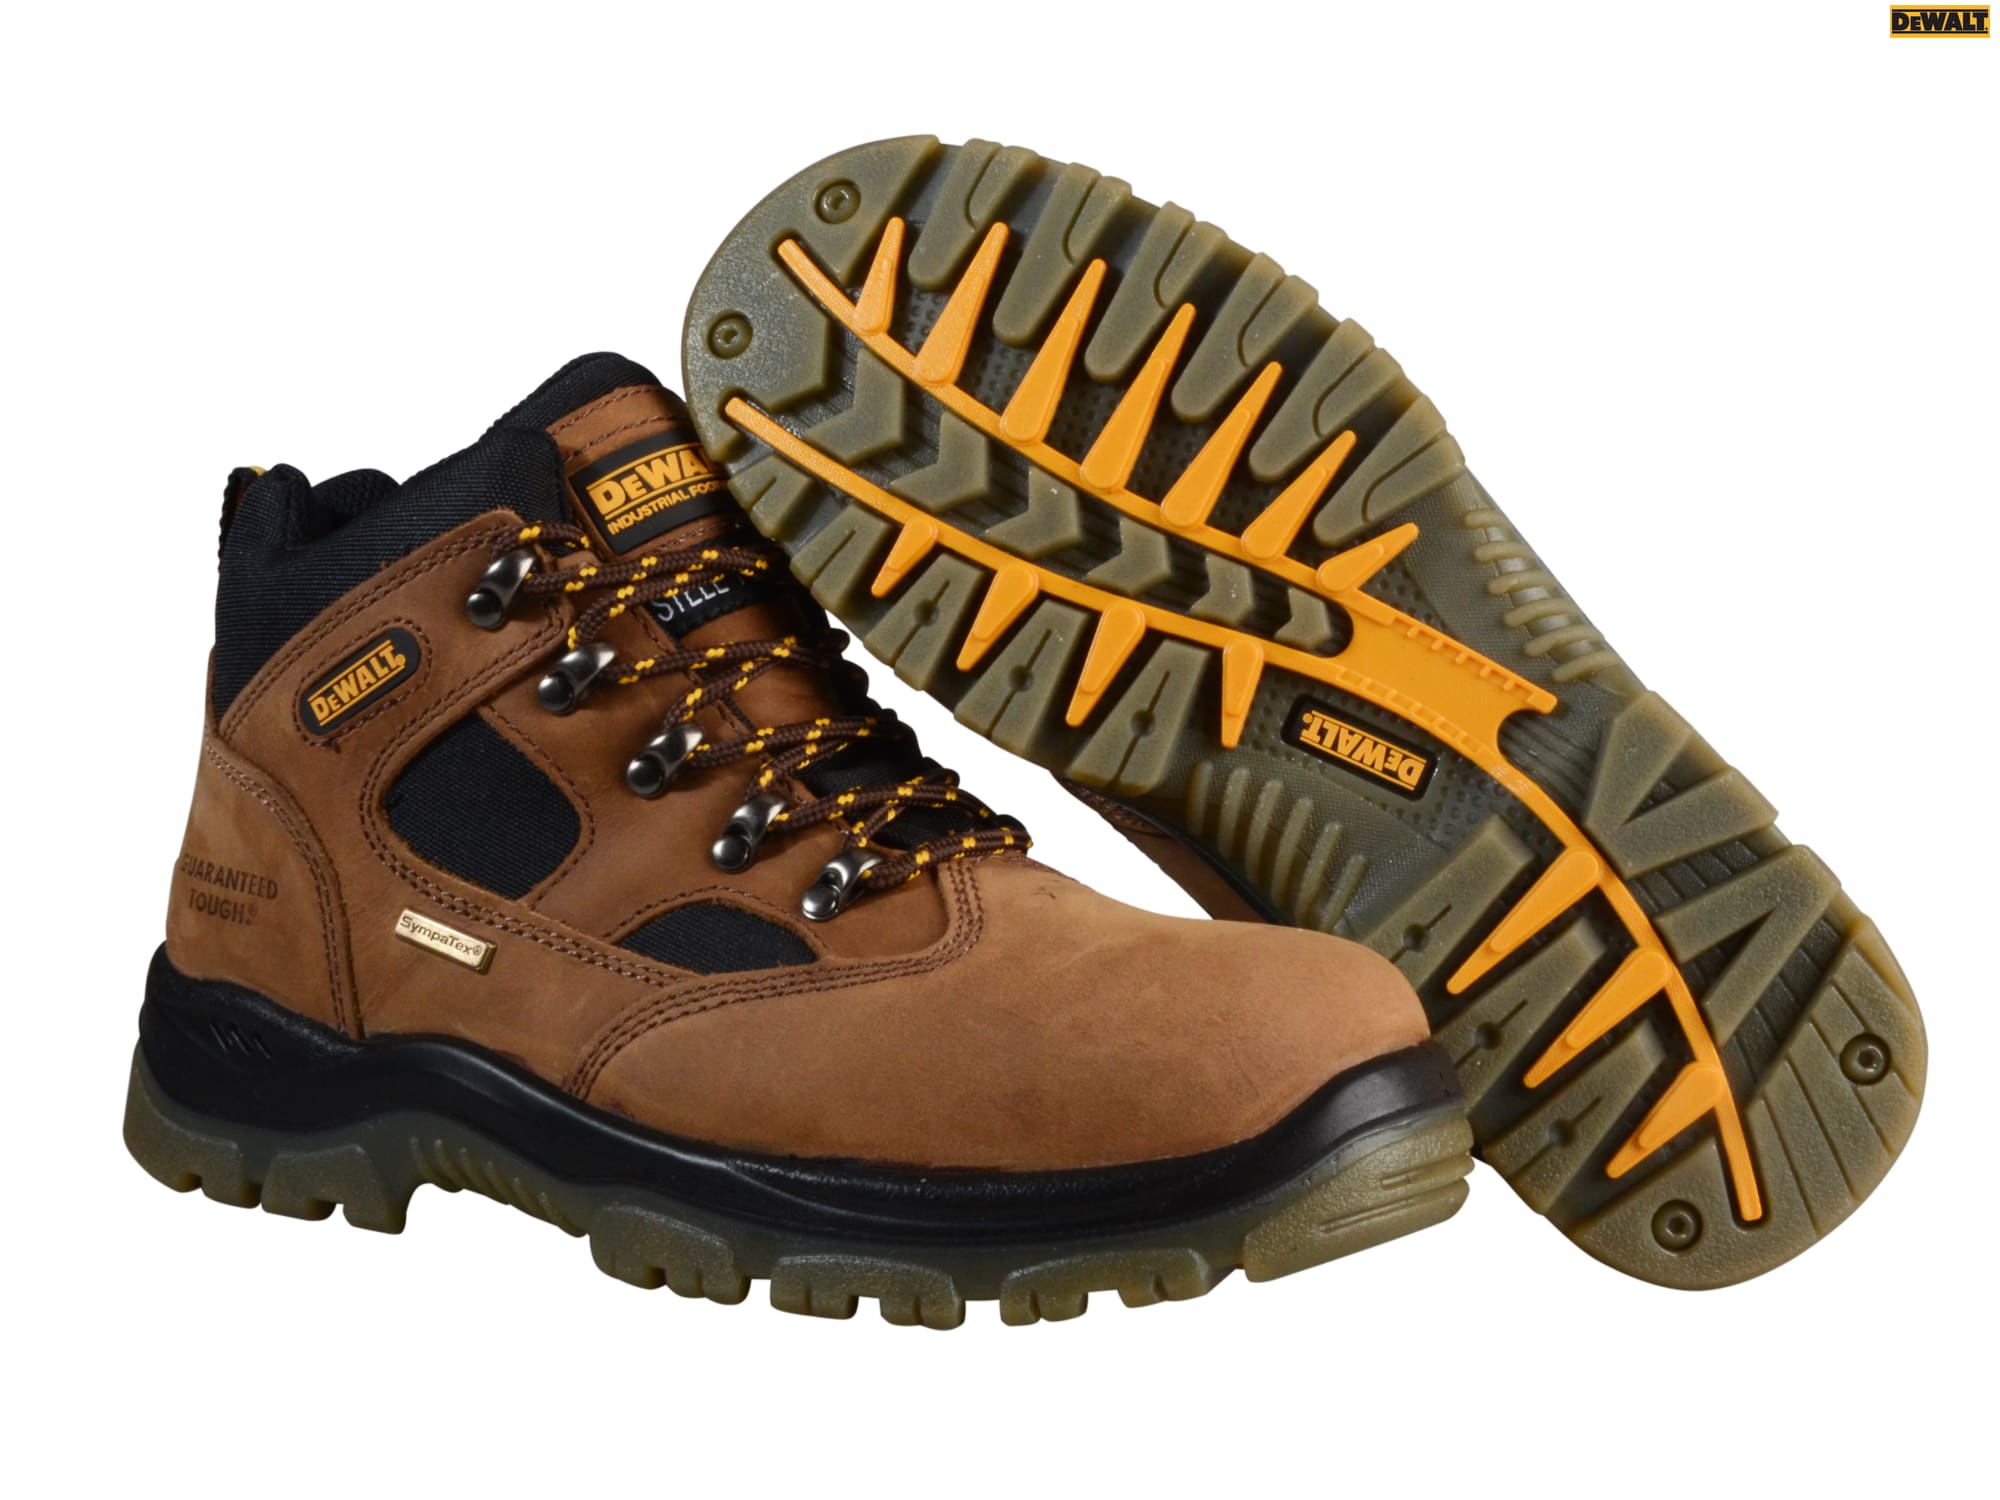 DeWalt Challenger 3 Sympatex Waterproof Hiker Boots